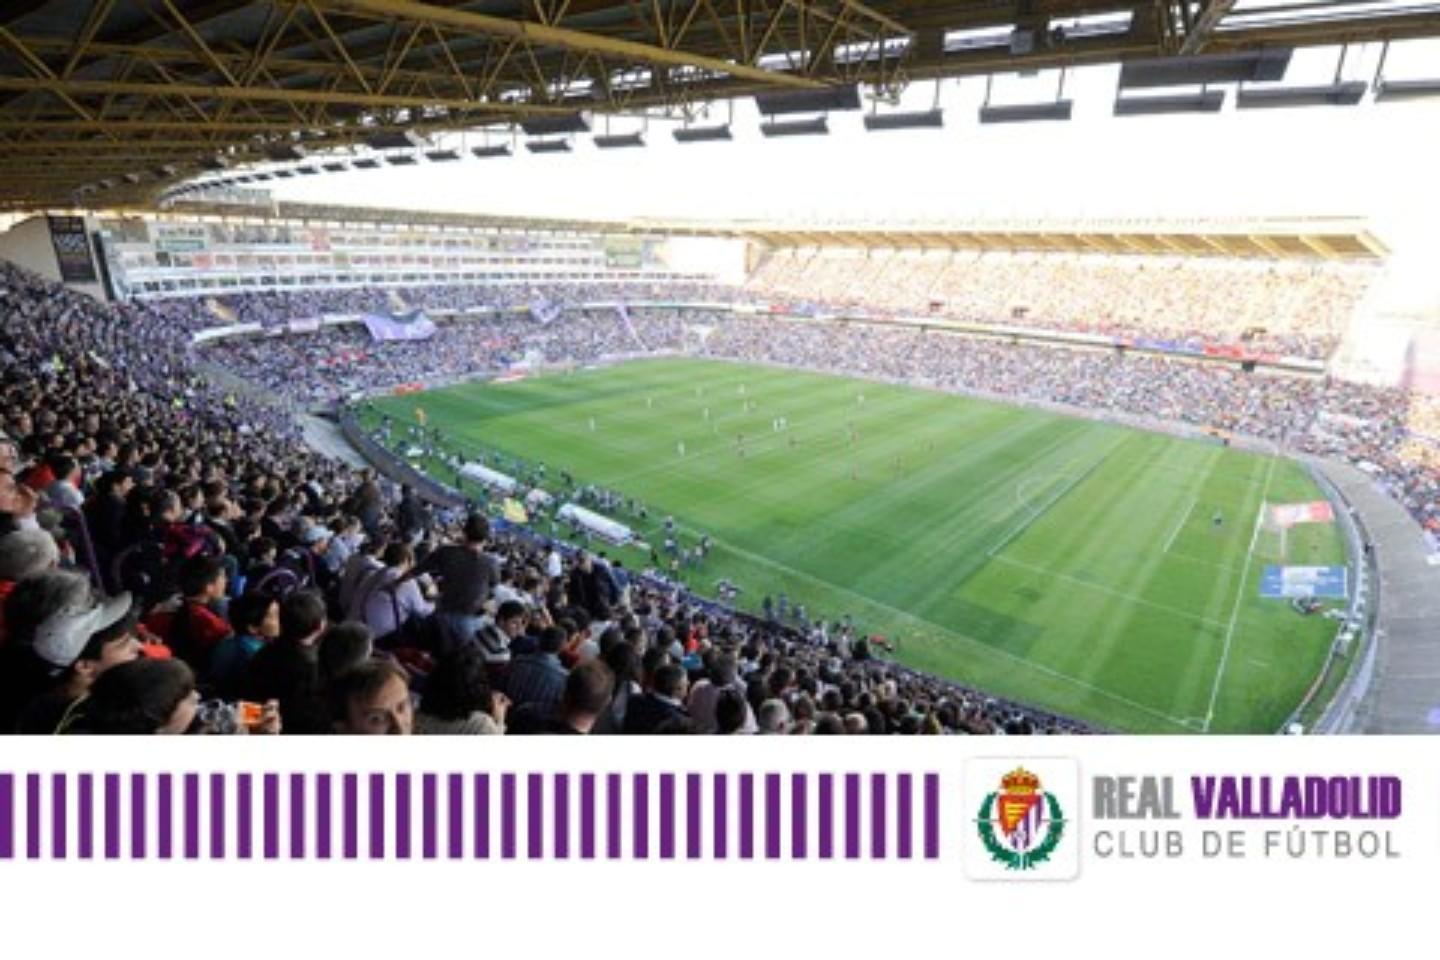 Valladolid Tickets | Buy or Sell Tickets for Valladolid 2020 Fixtures - viagogo